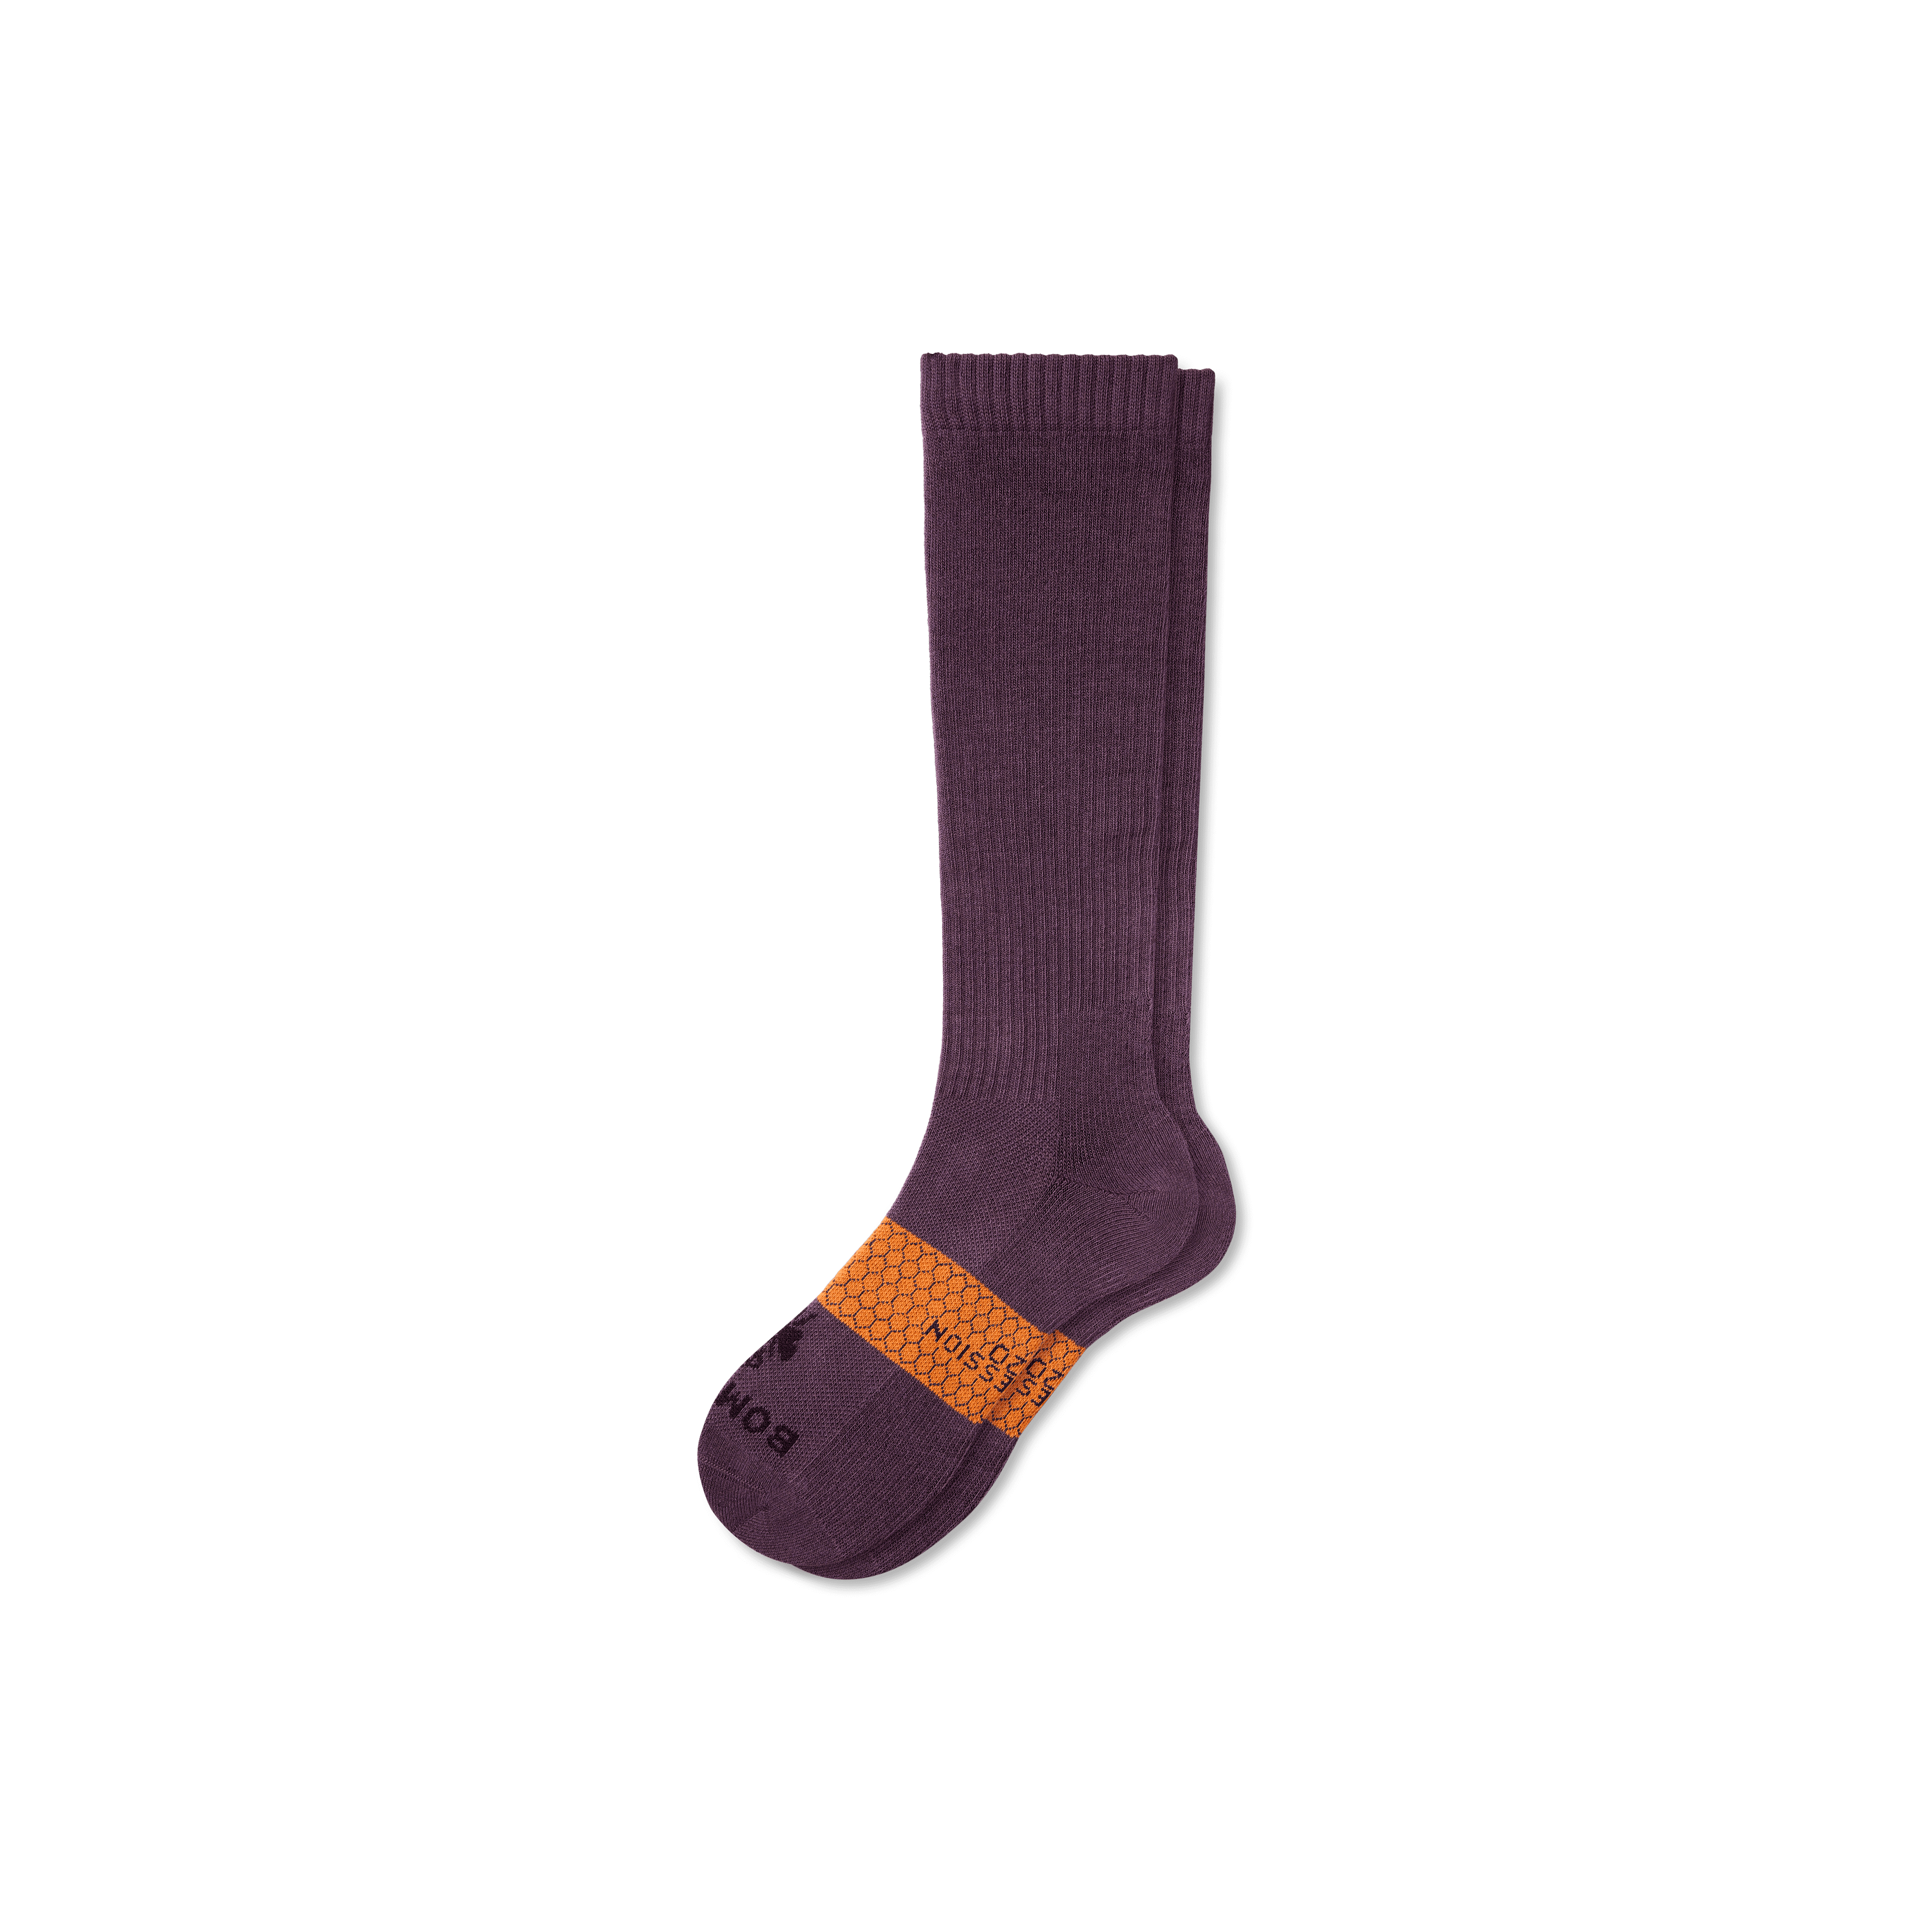 Bombas Everyday Compression Socks (15-20mmhg) In Purple Plum